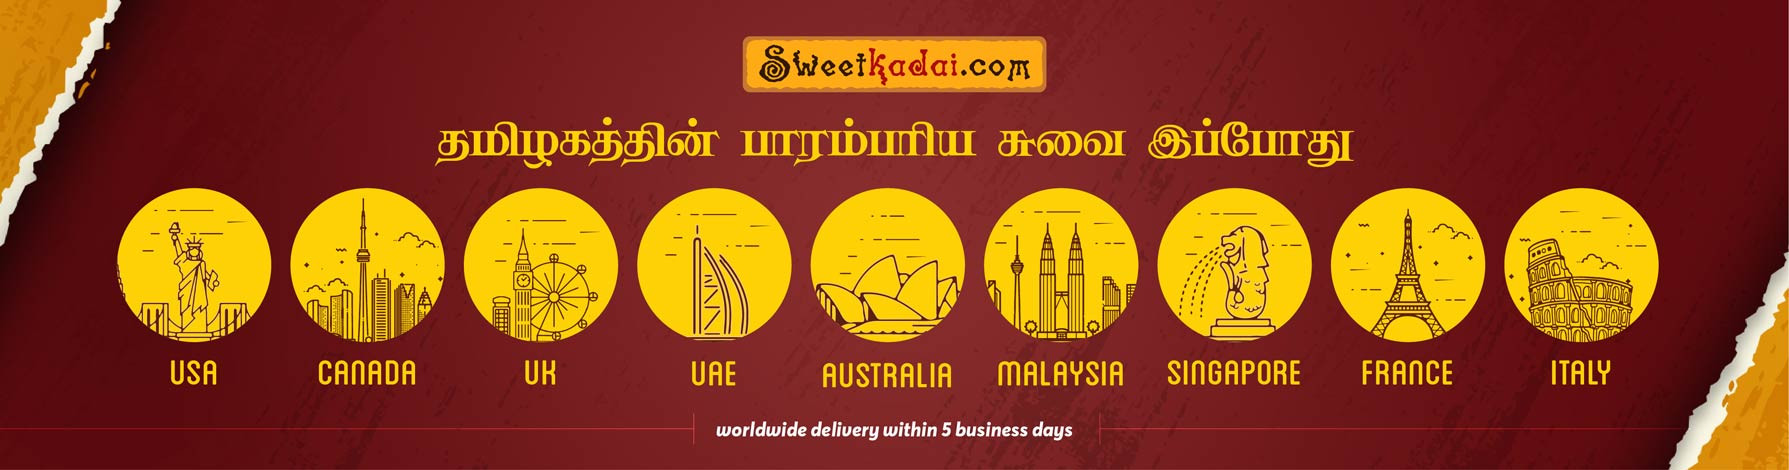 Sweetkadai.com - Global Shipment